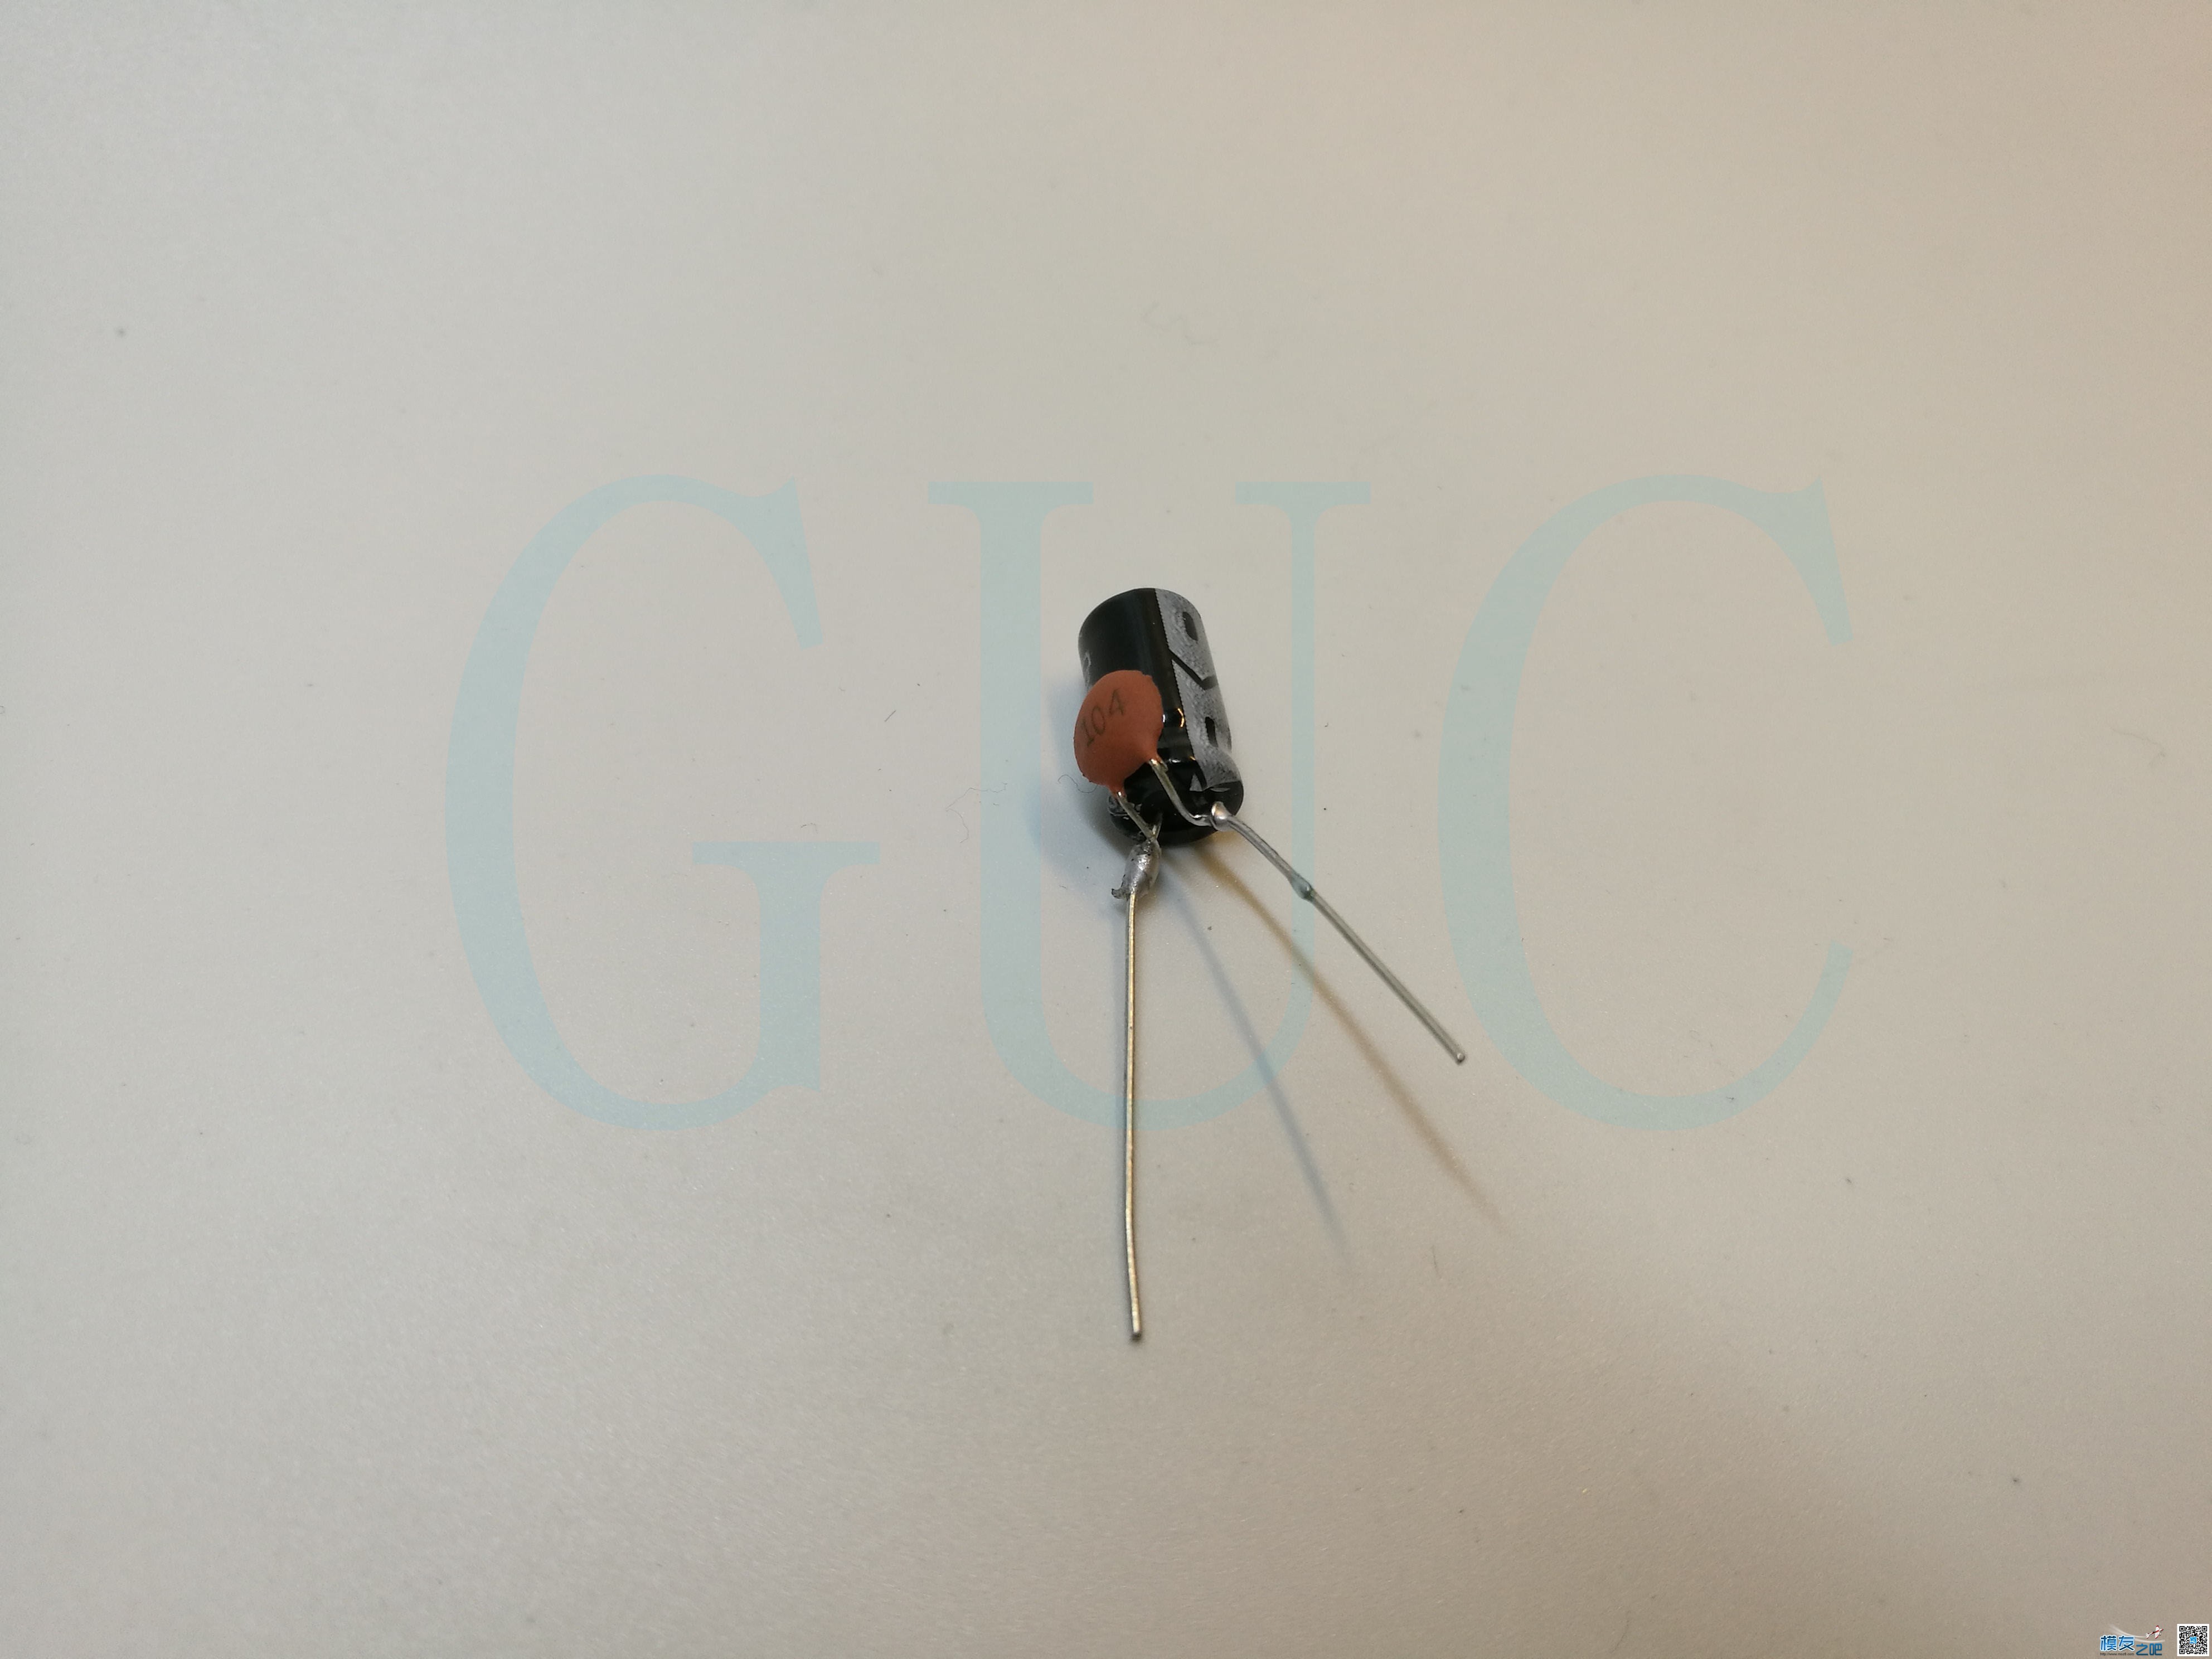 【GUC CIY】超声波辅助飞行模块 制作,超声波 作者:Guc 6535 